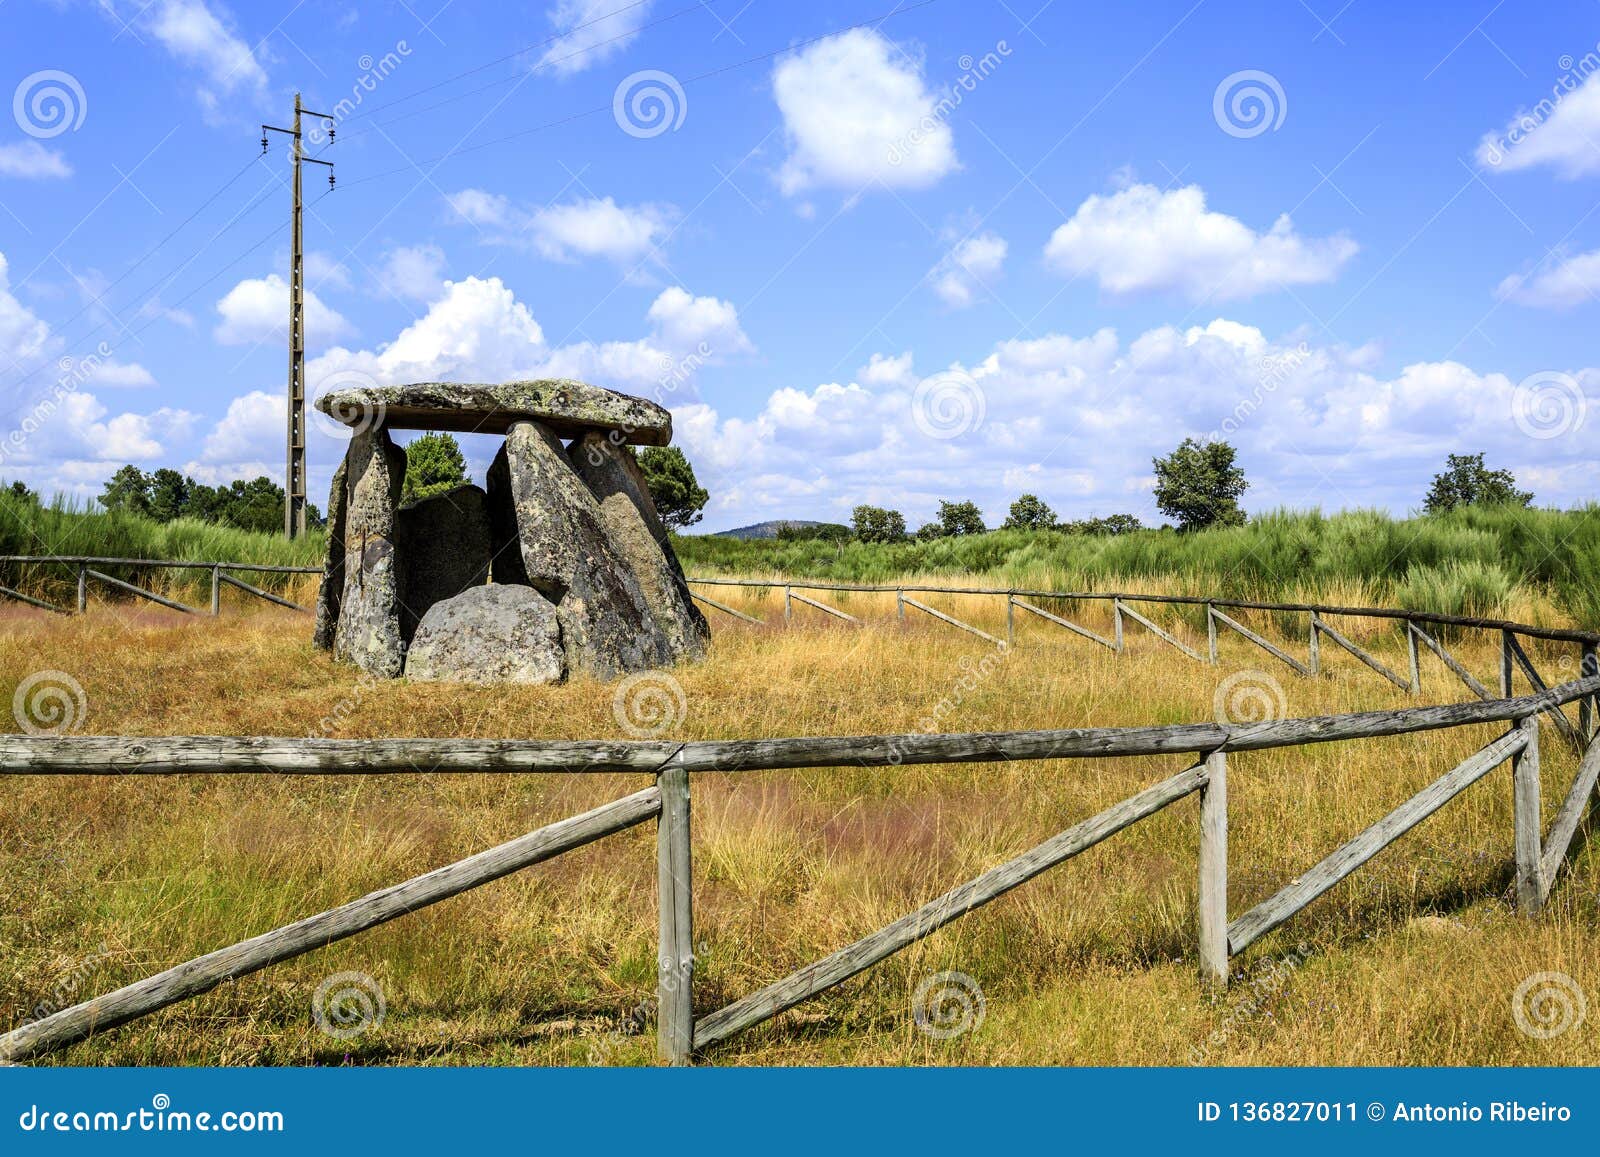 dolmen de matanca or dolmen of slaughter